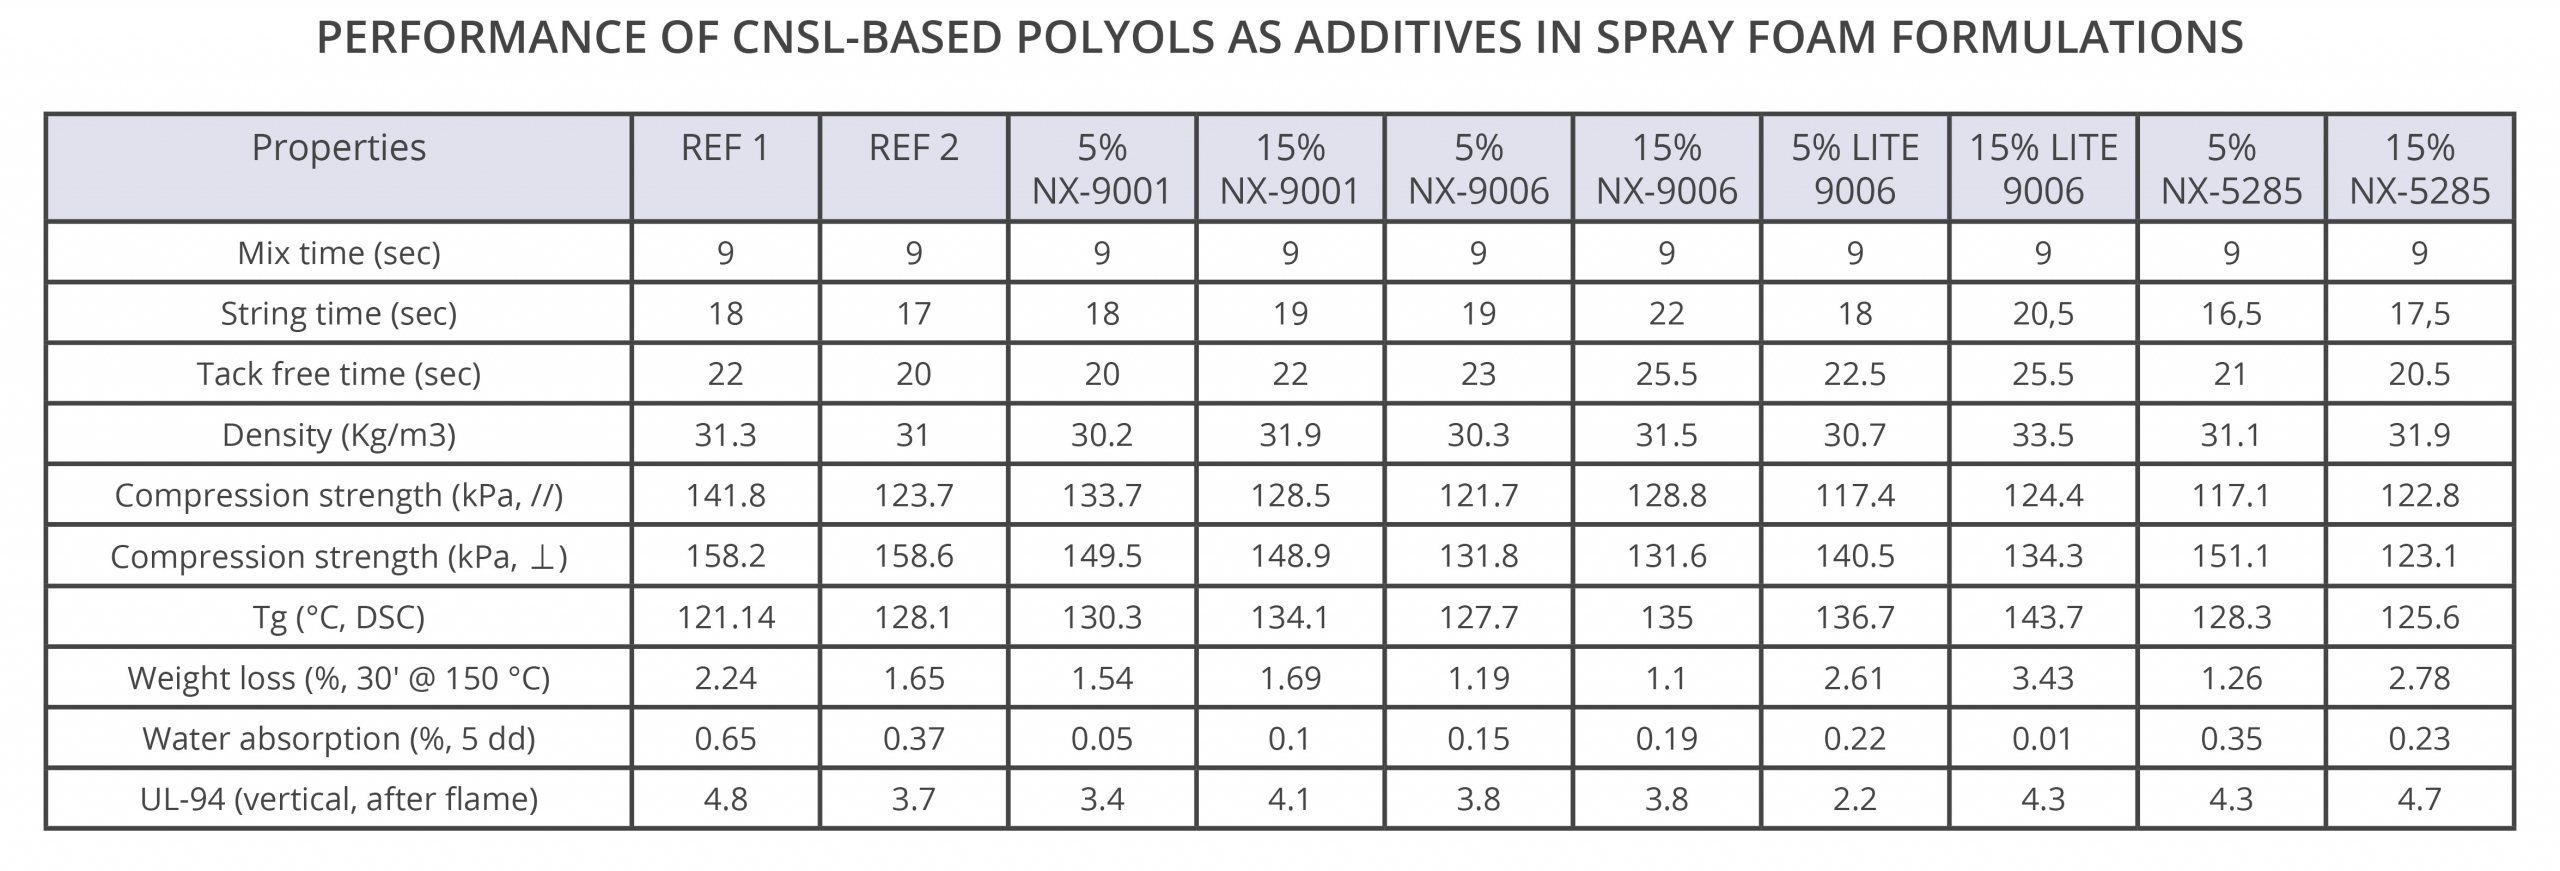 CNSL based polyols improve performance of polyurethane foams